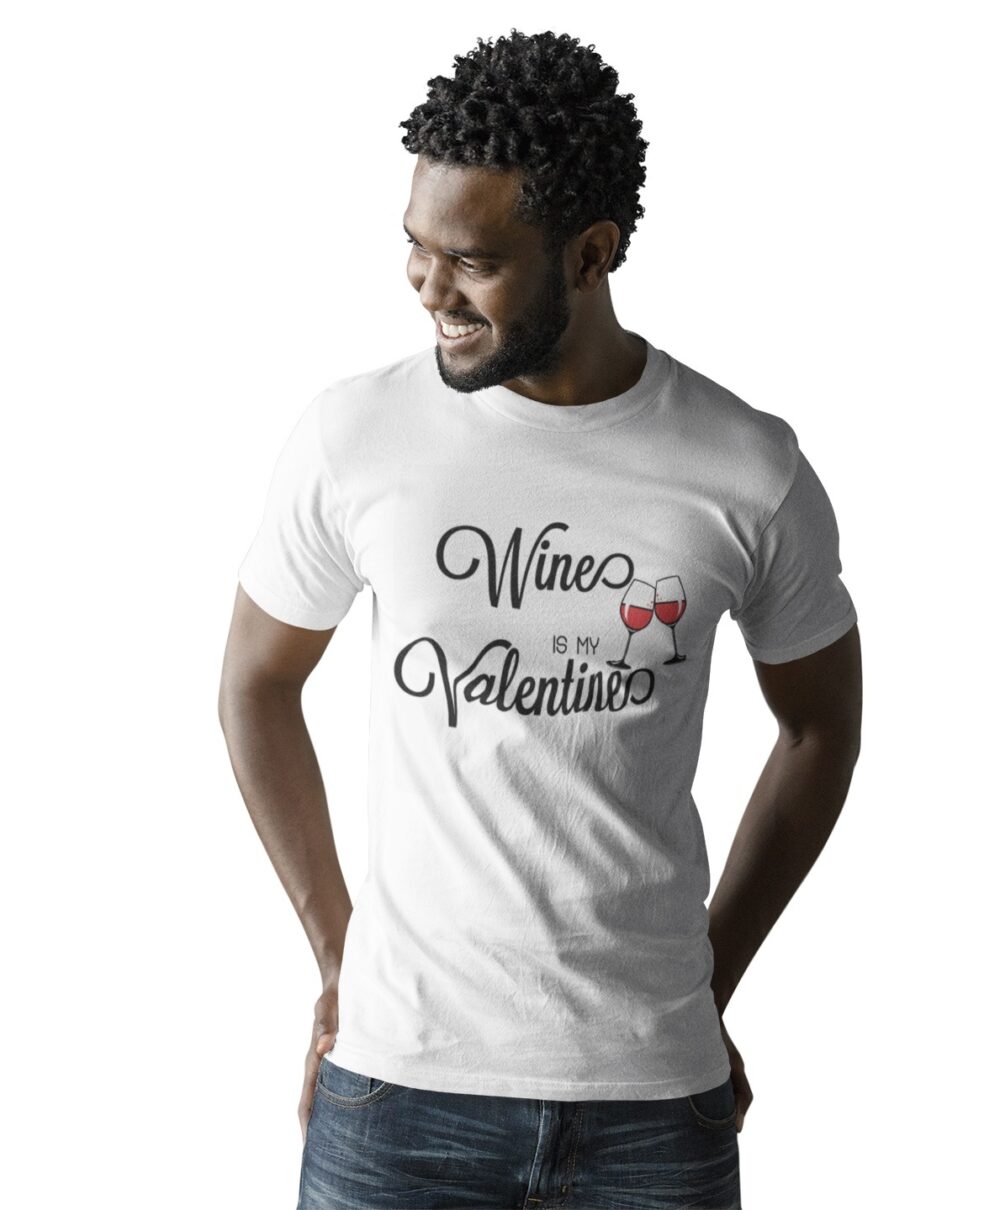 Valentine Day T shirts